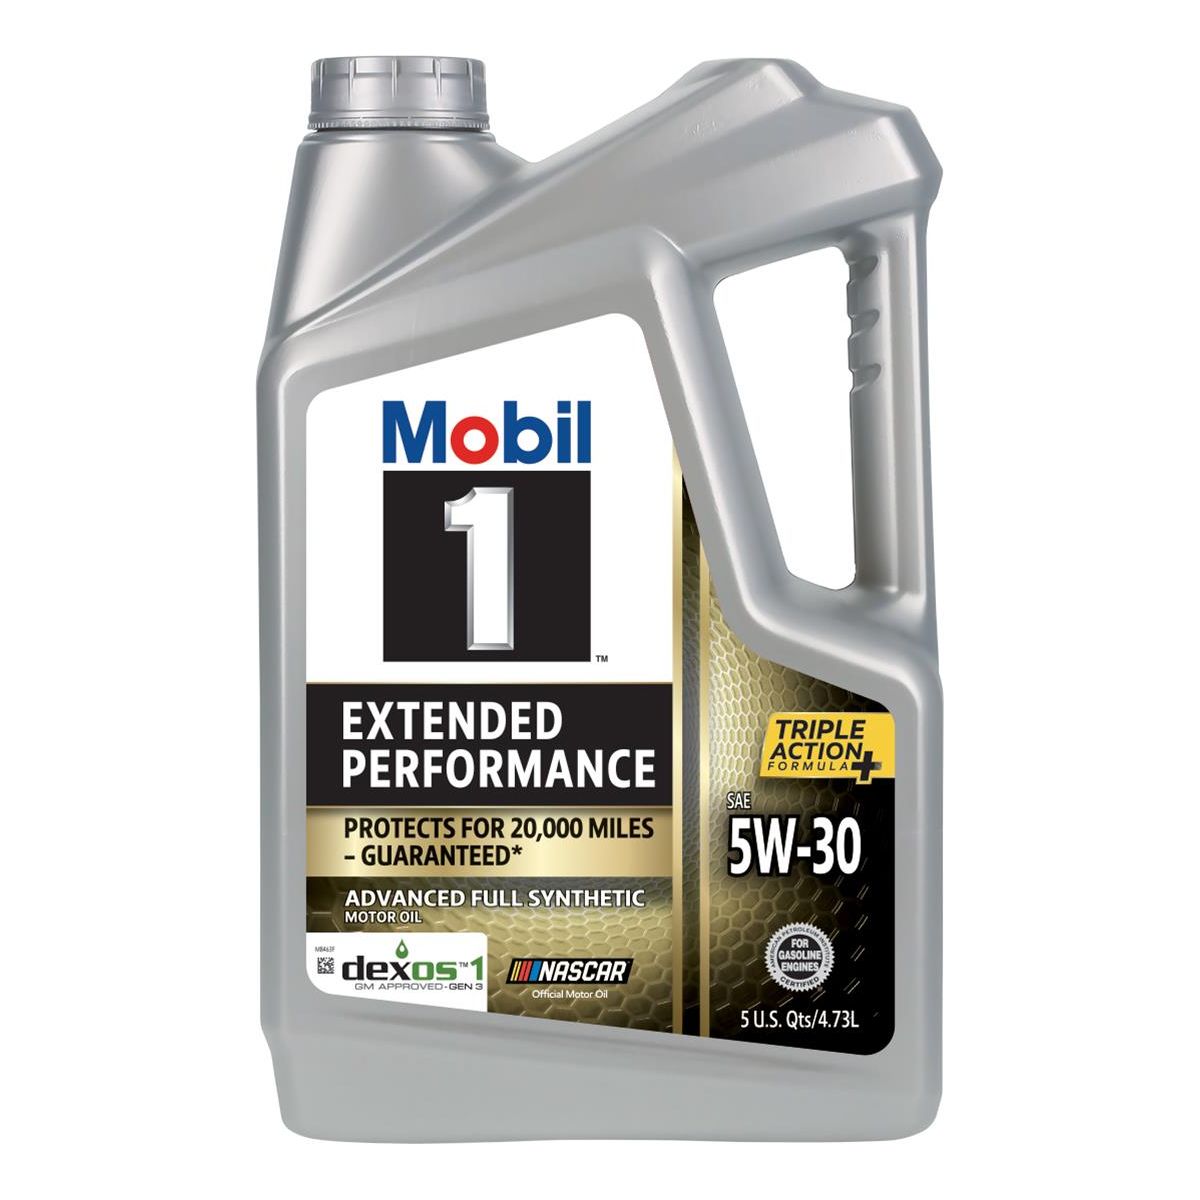 Mobil 1 Extended Performance Standard Full Synthetic Engine Oil 5W-30 5 Quart 120766